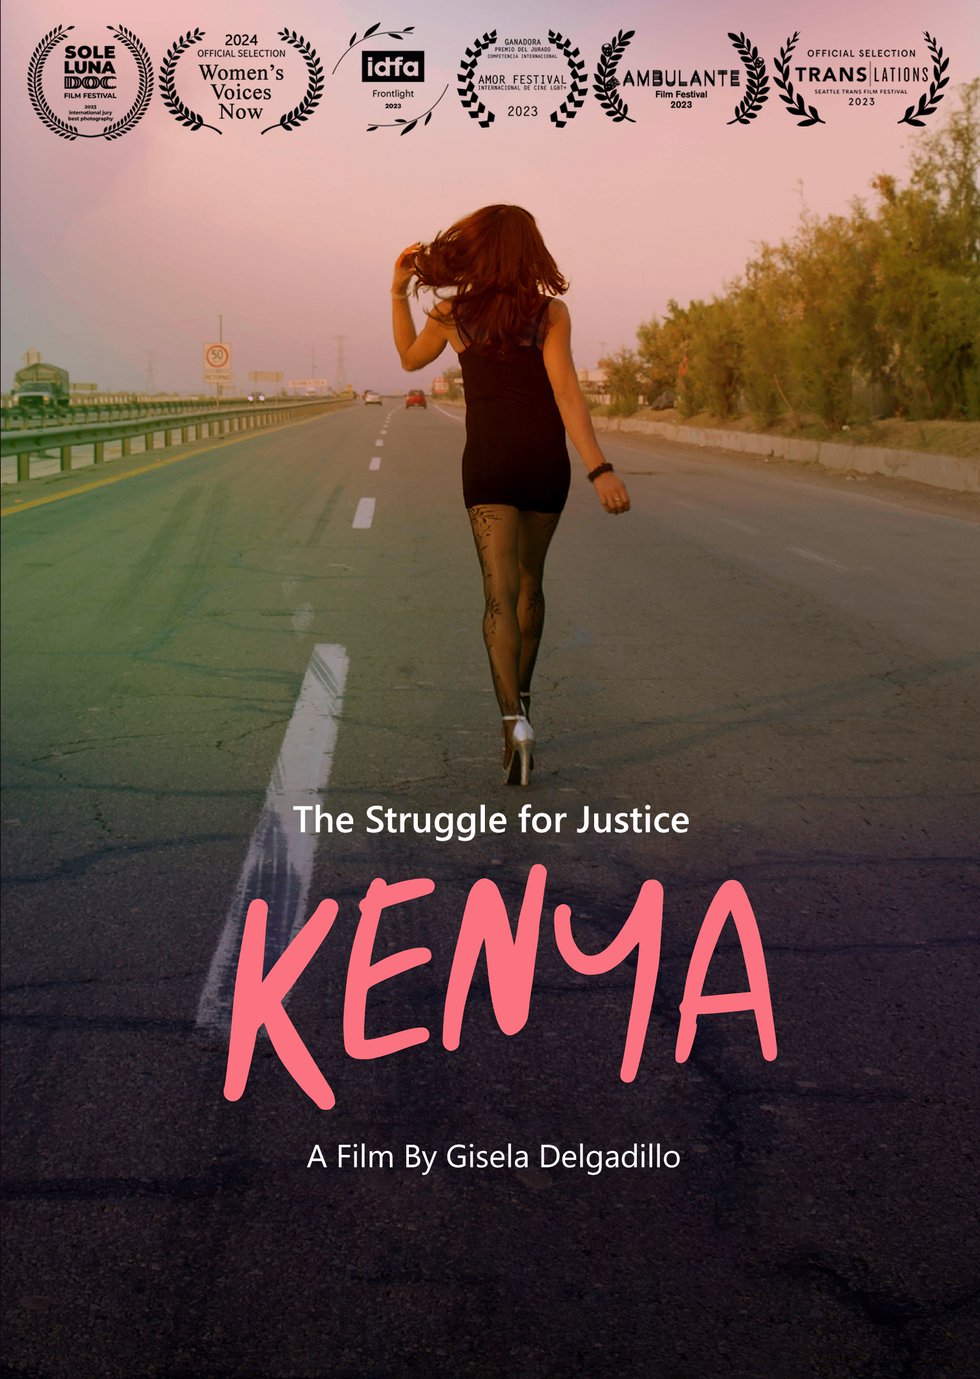 Kenya LGBTQ Documentary